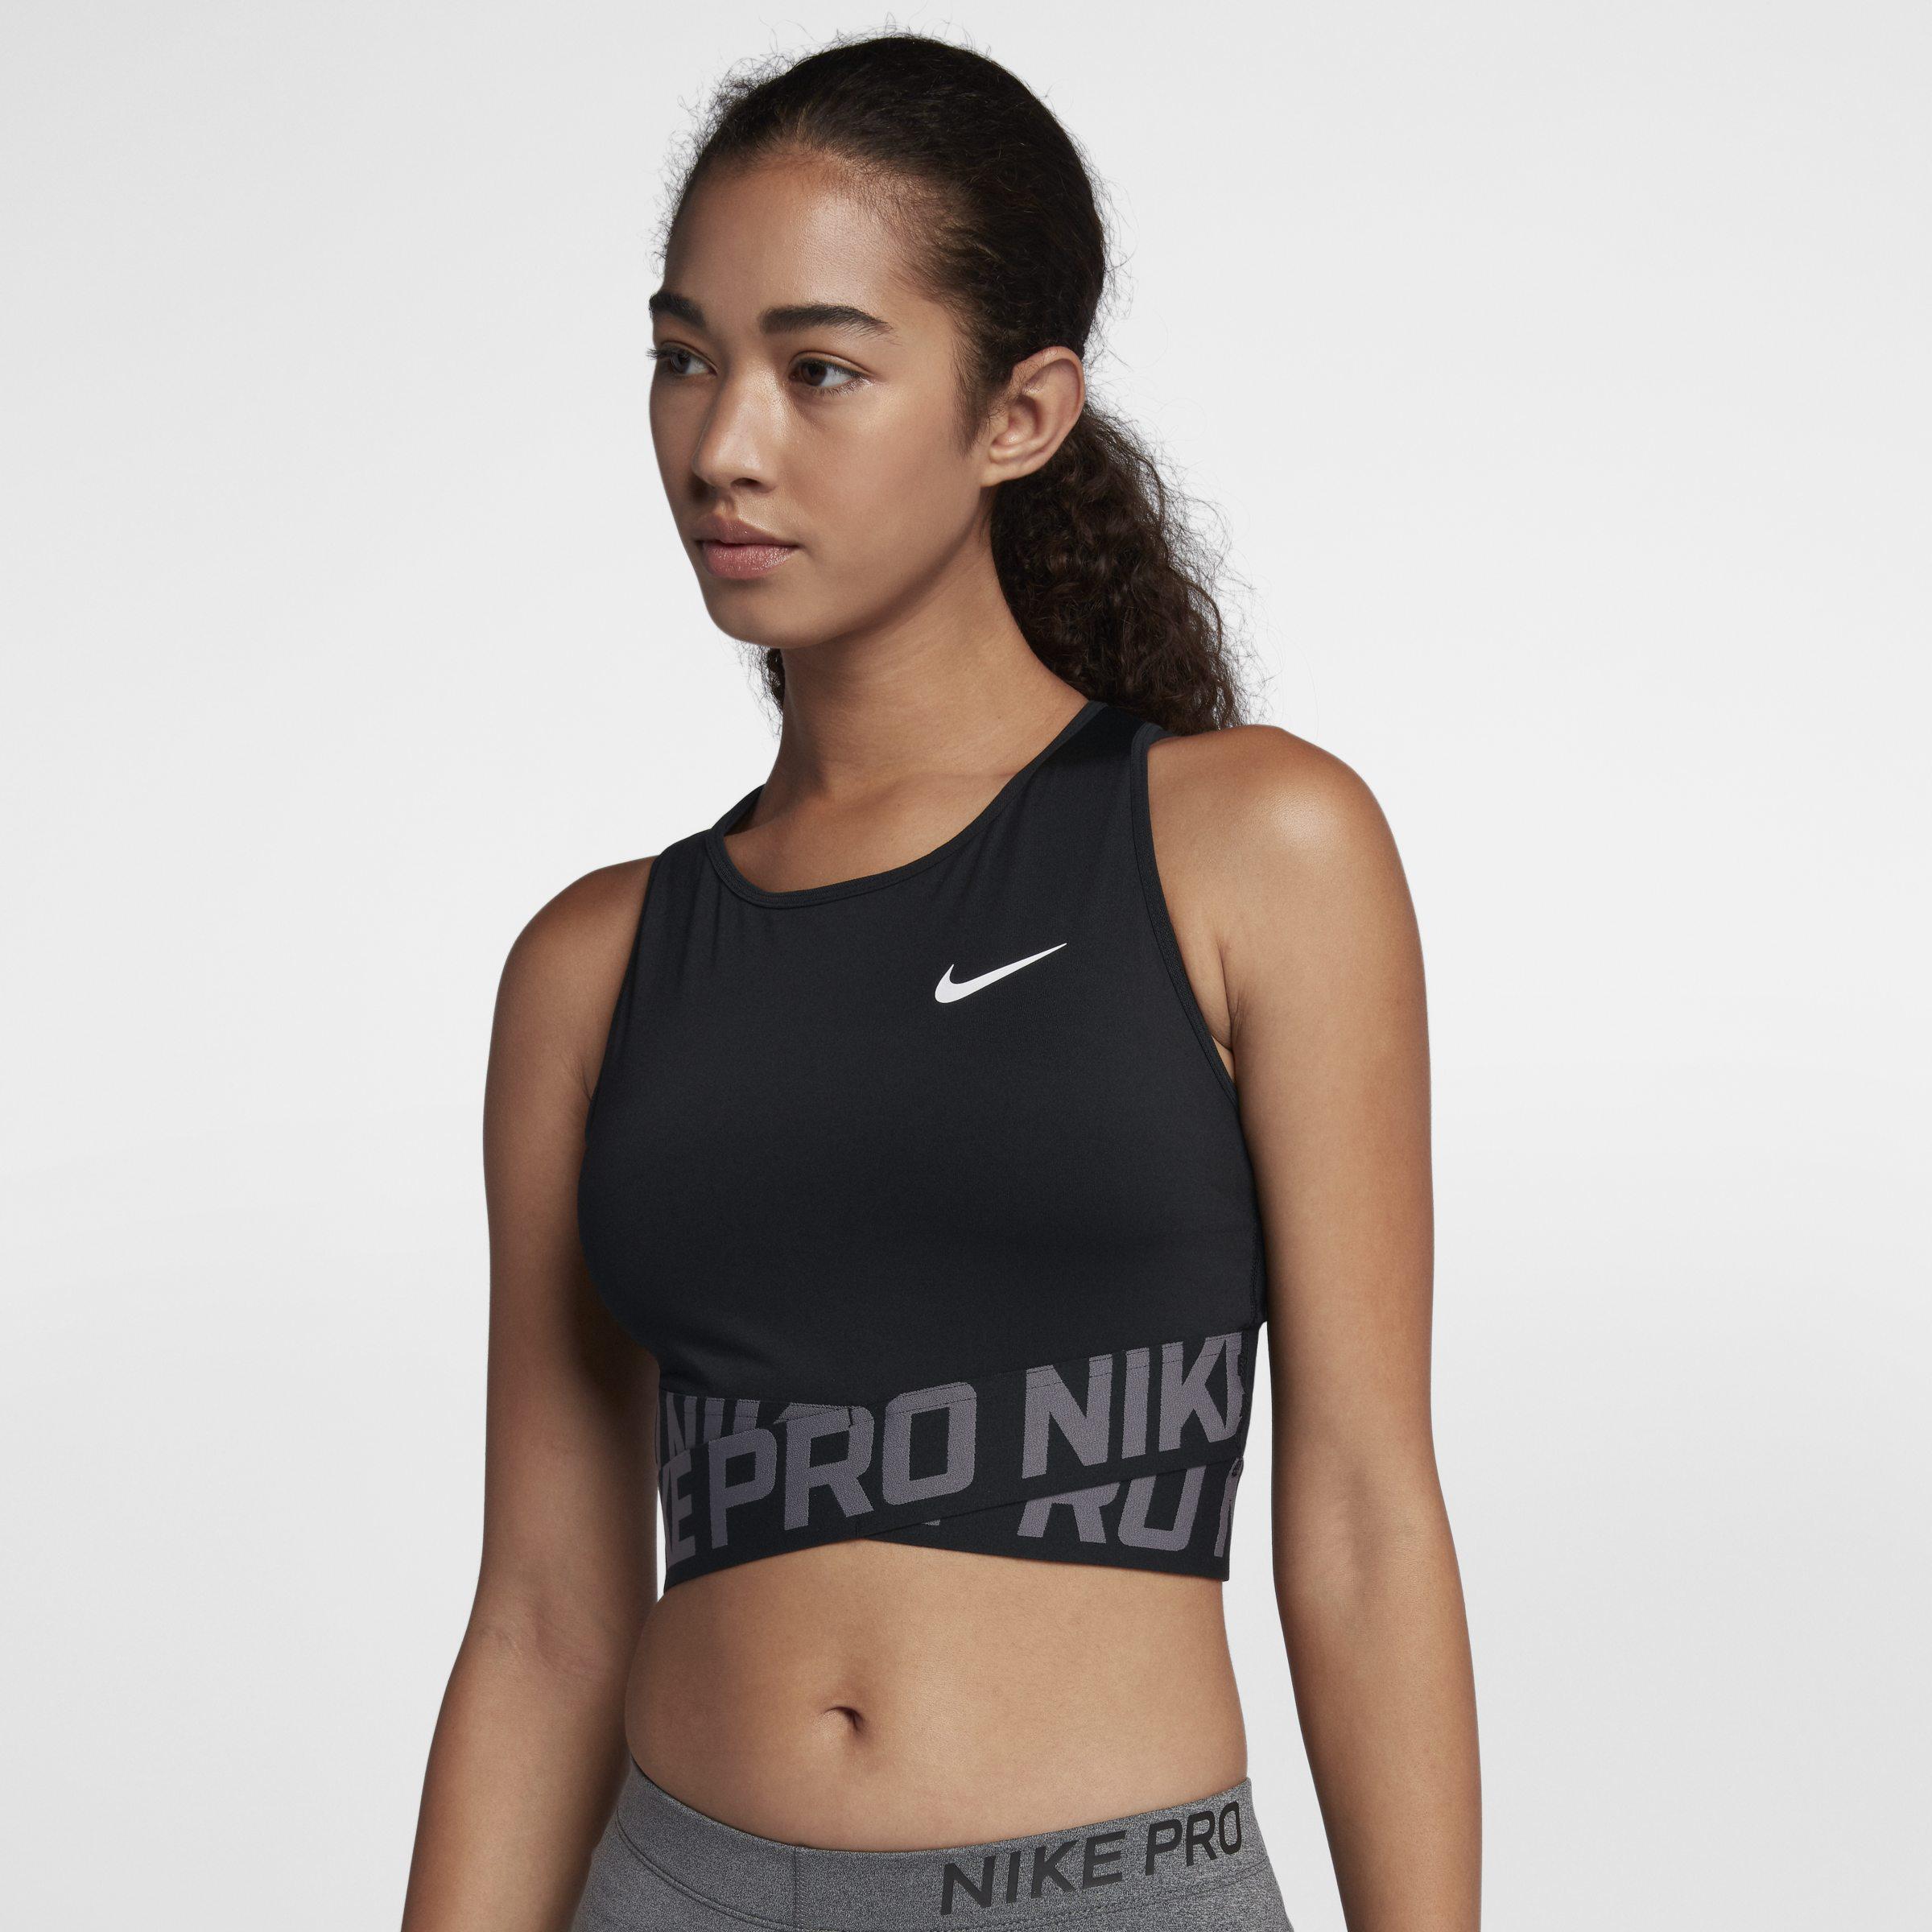 Спортивные nike женские. Nike Pro Intertwist майка. Womens femme Nike топ. Nike Pro Nike это. Майка Nike Pro Tank женская черная.